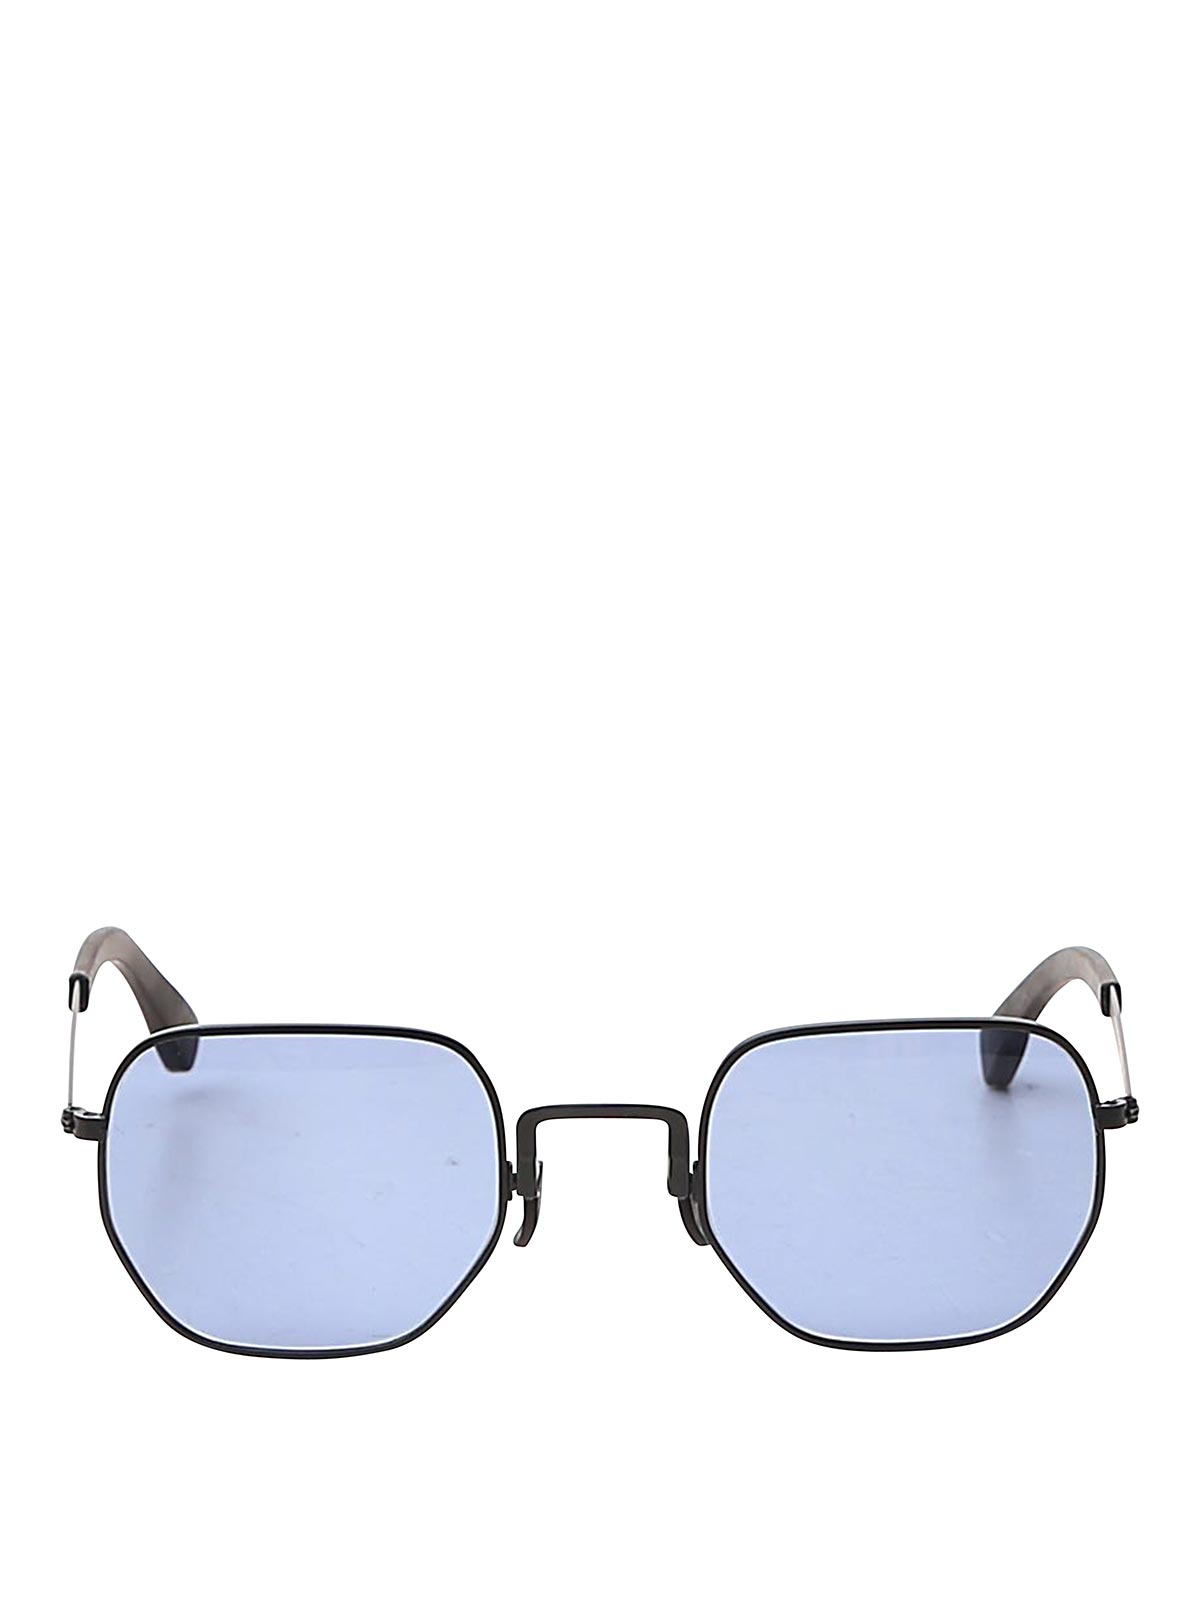 Movitra Sunglasses In Matte Black With Blue Lenses In Purple